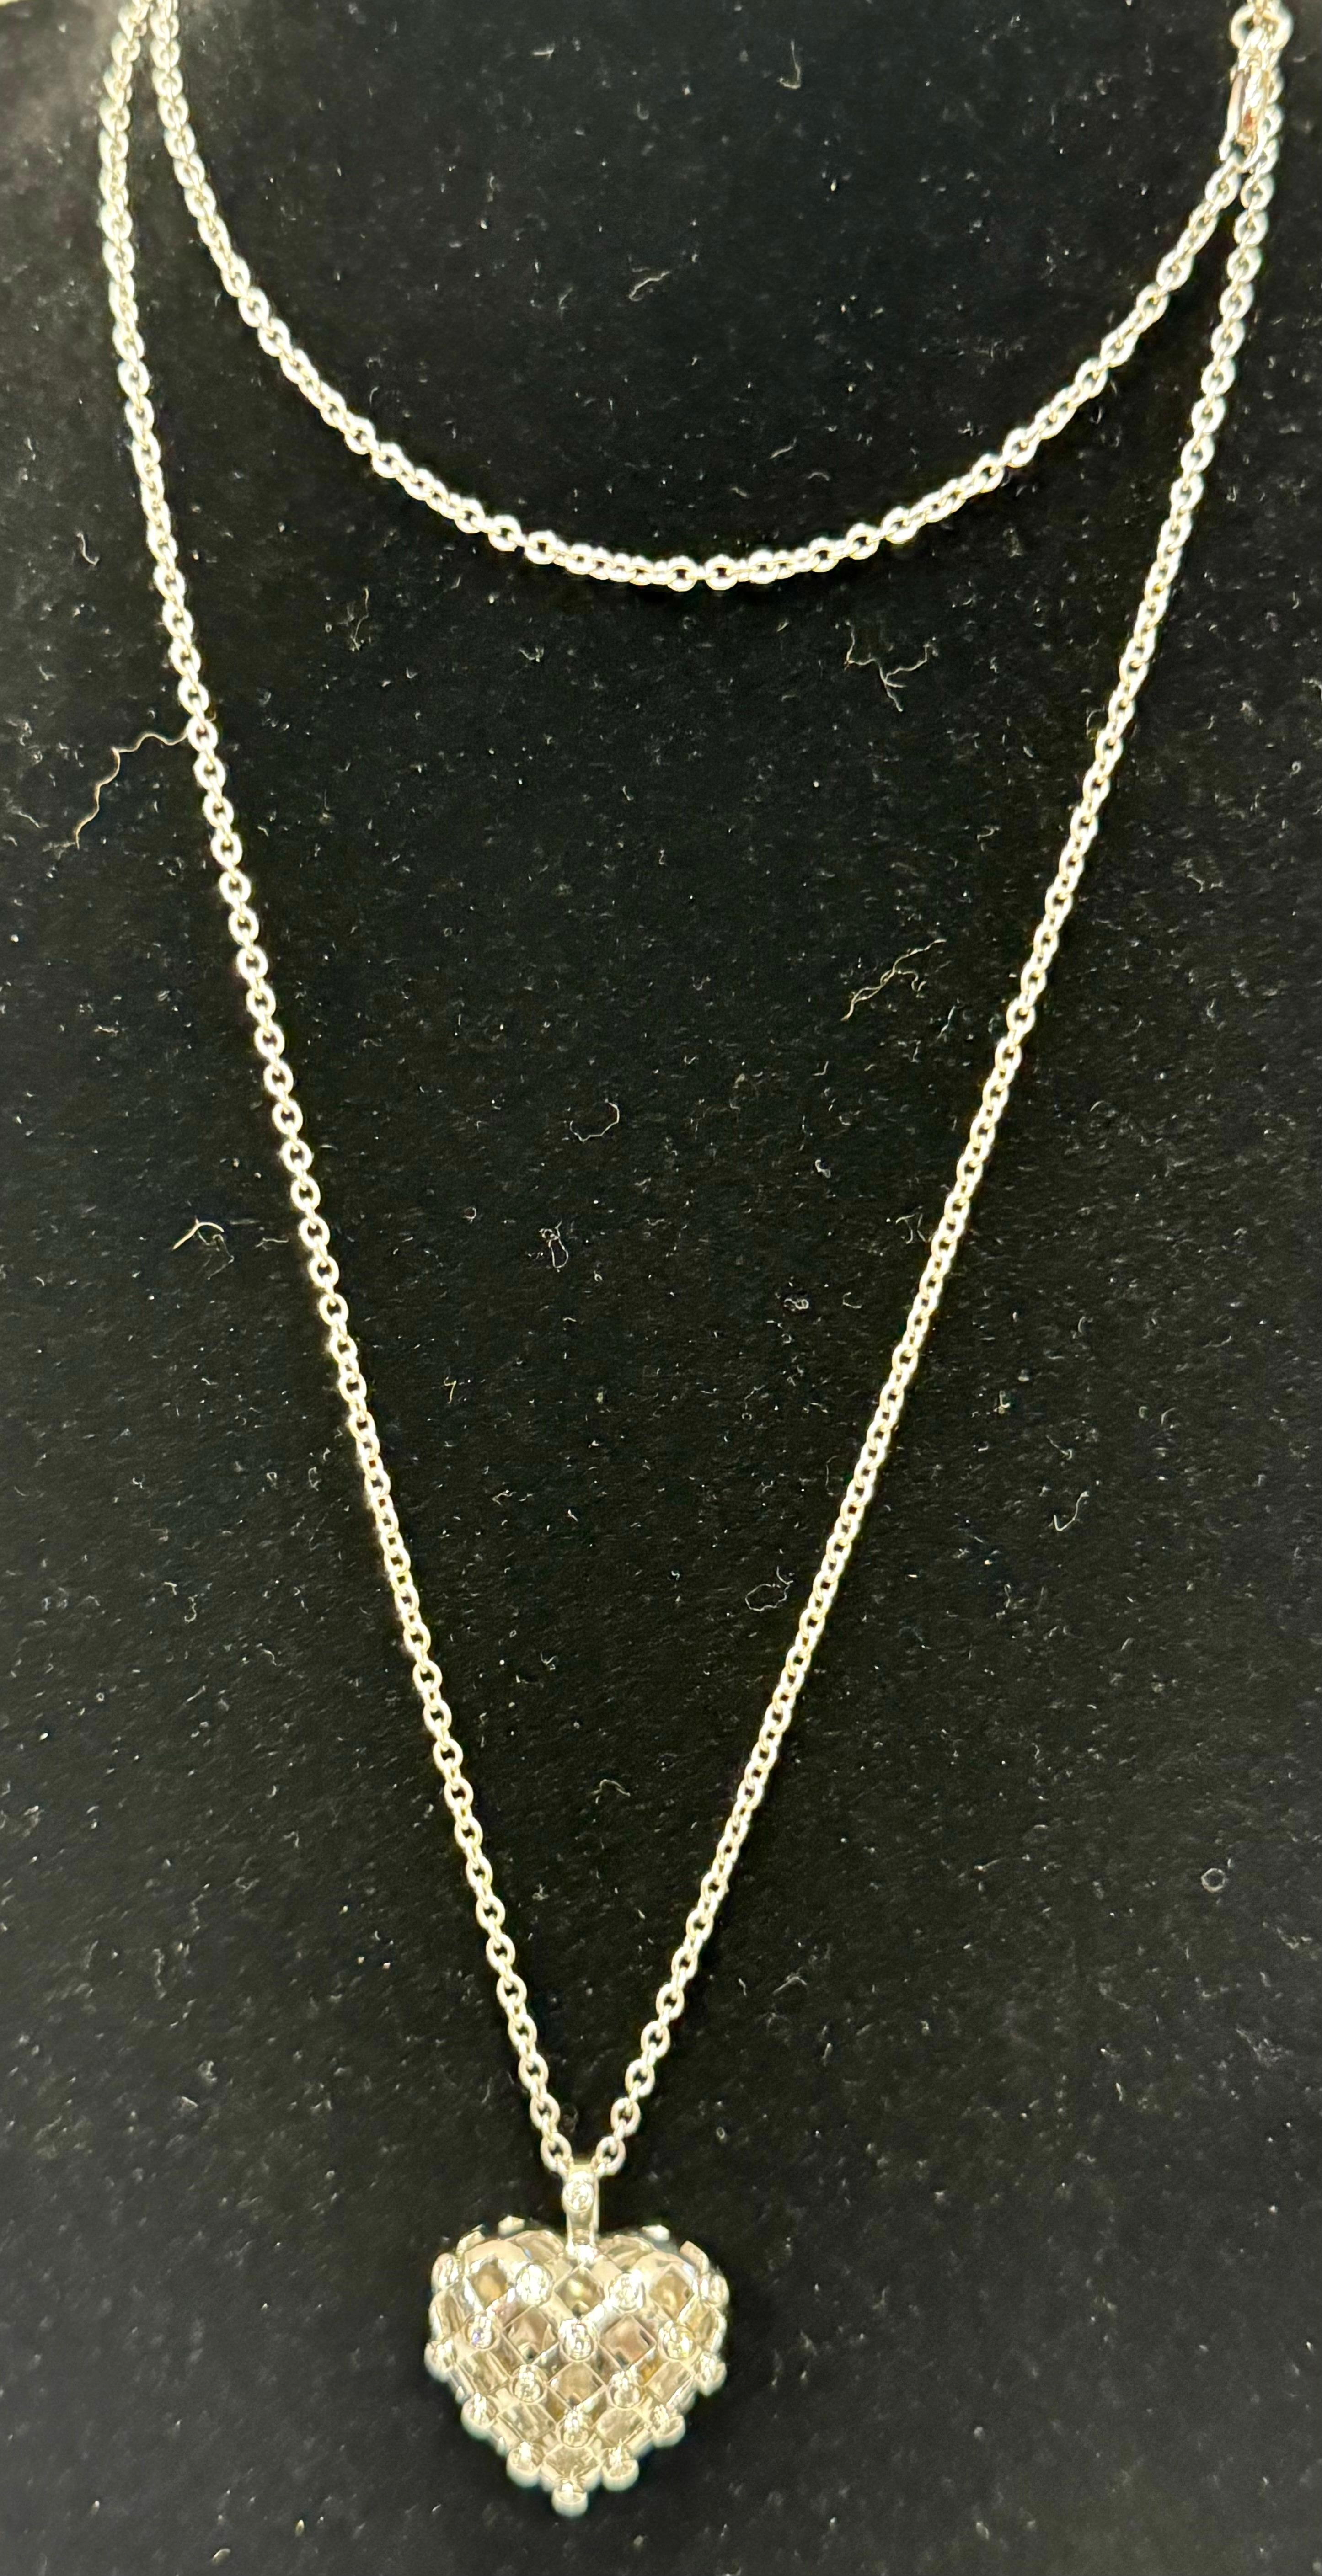 Tiffany & CO Heart Diamond Pendant Necklace 18K White Gold 0.50 CT 31